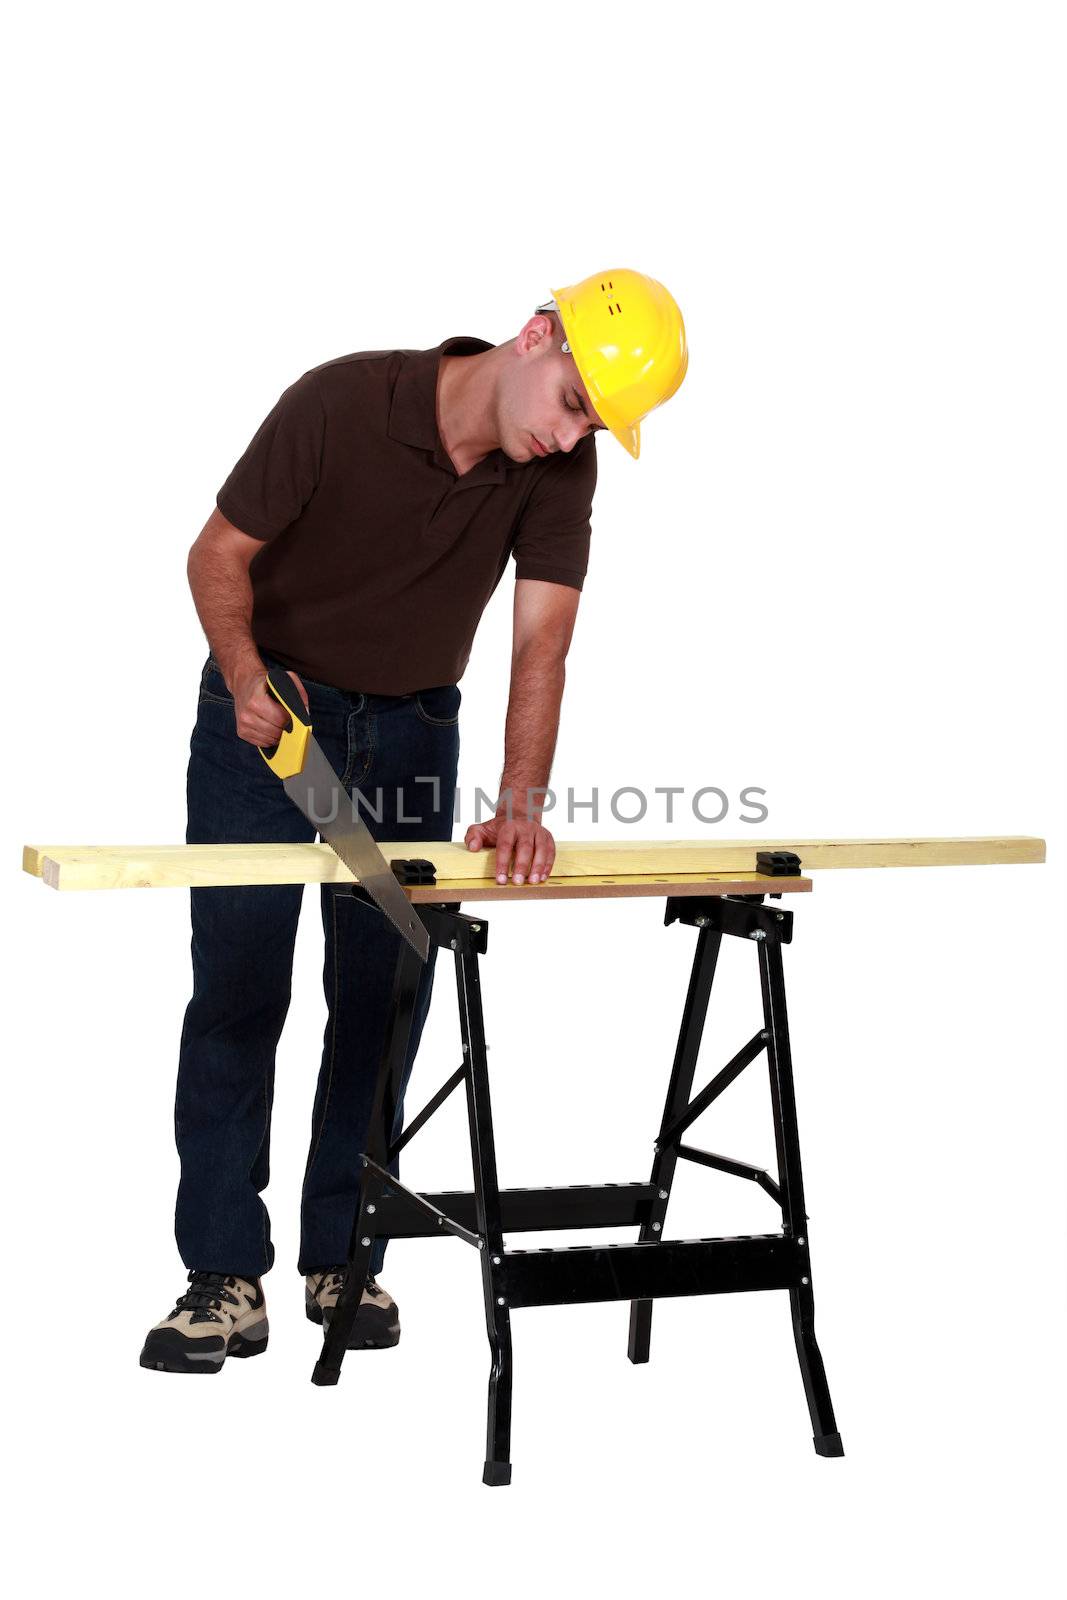 craftsman cutting a board by phovoir